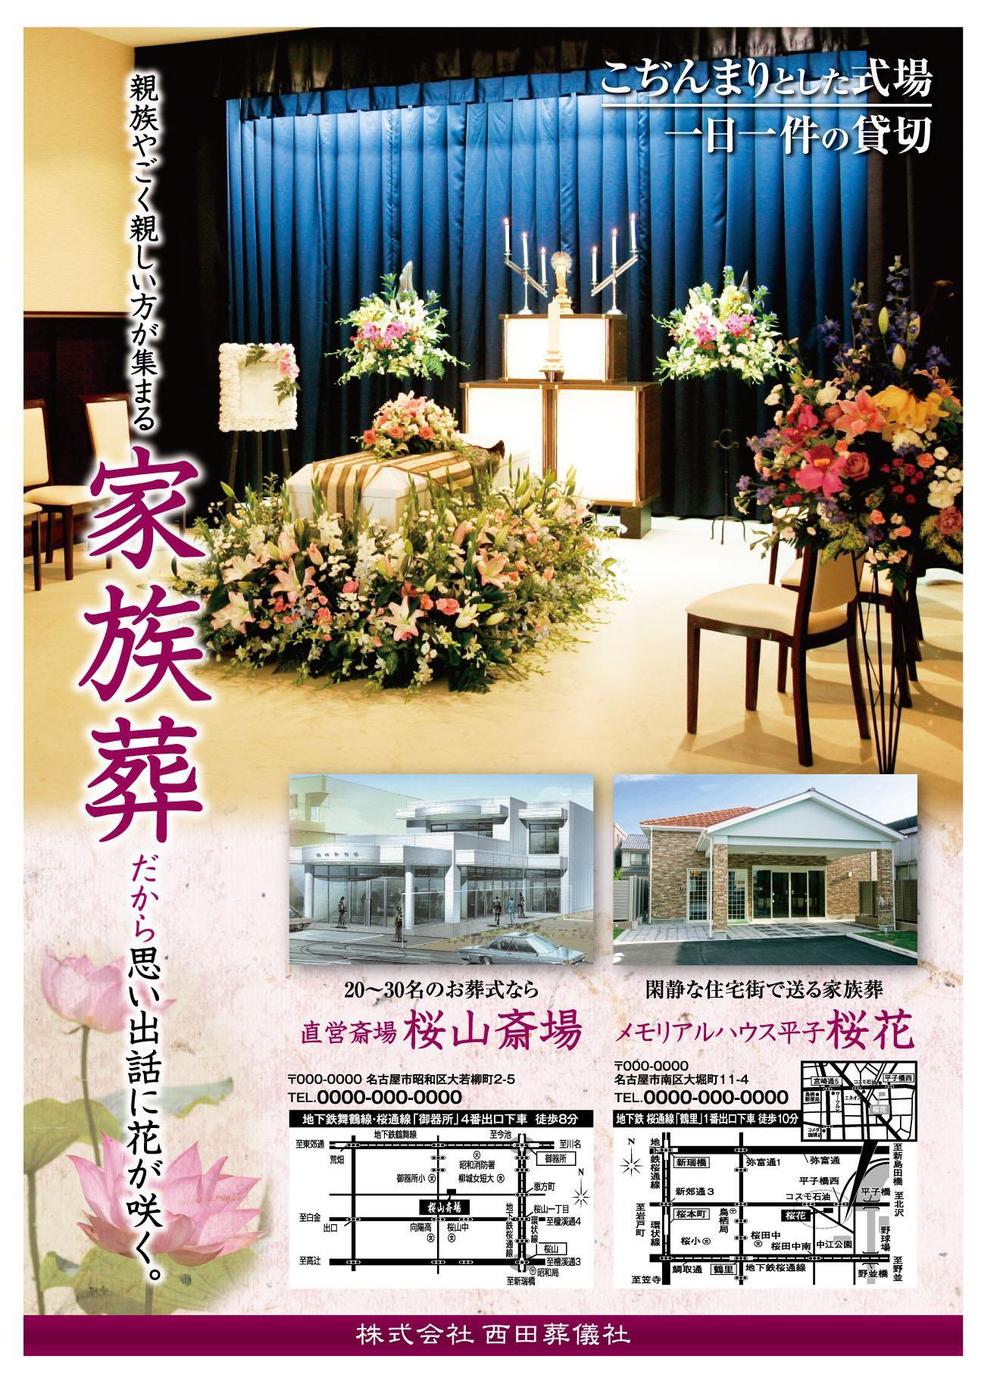 yuki0407さんの事例・実績・提案 - 葬儀社・家族葬の広告 | はじめまして、yuk... | クラウドソーシング「ランサーズ」